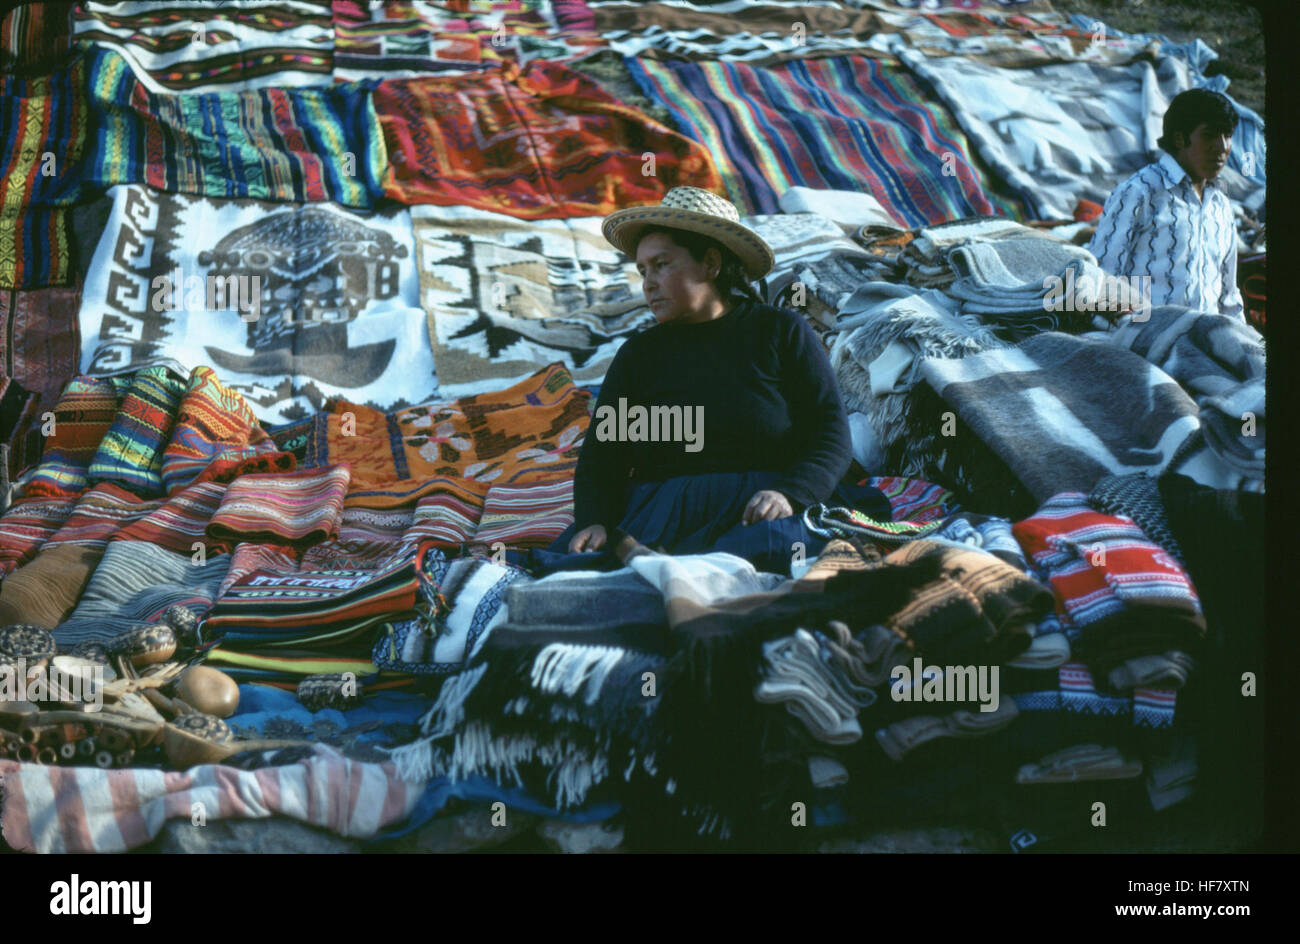 Display of handmade carpets at roadside; near Cuzco, Peru. Stock Photo